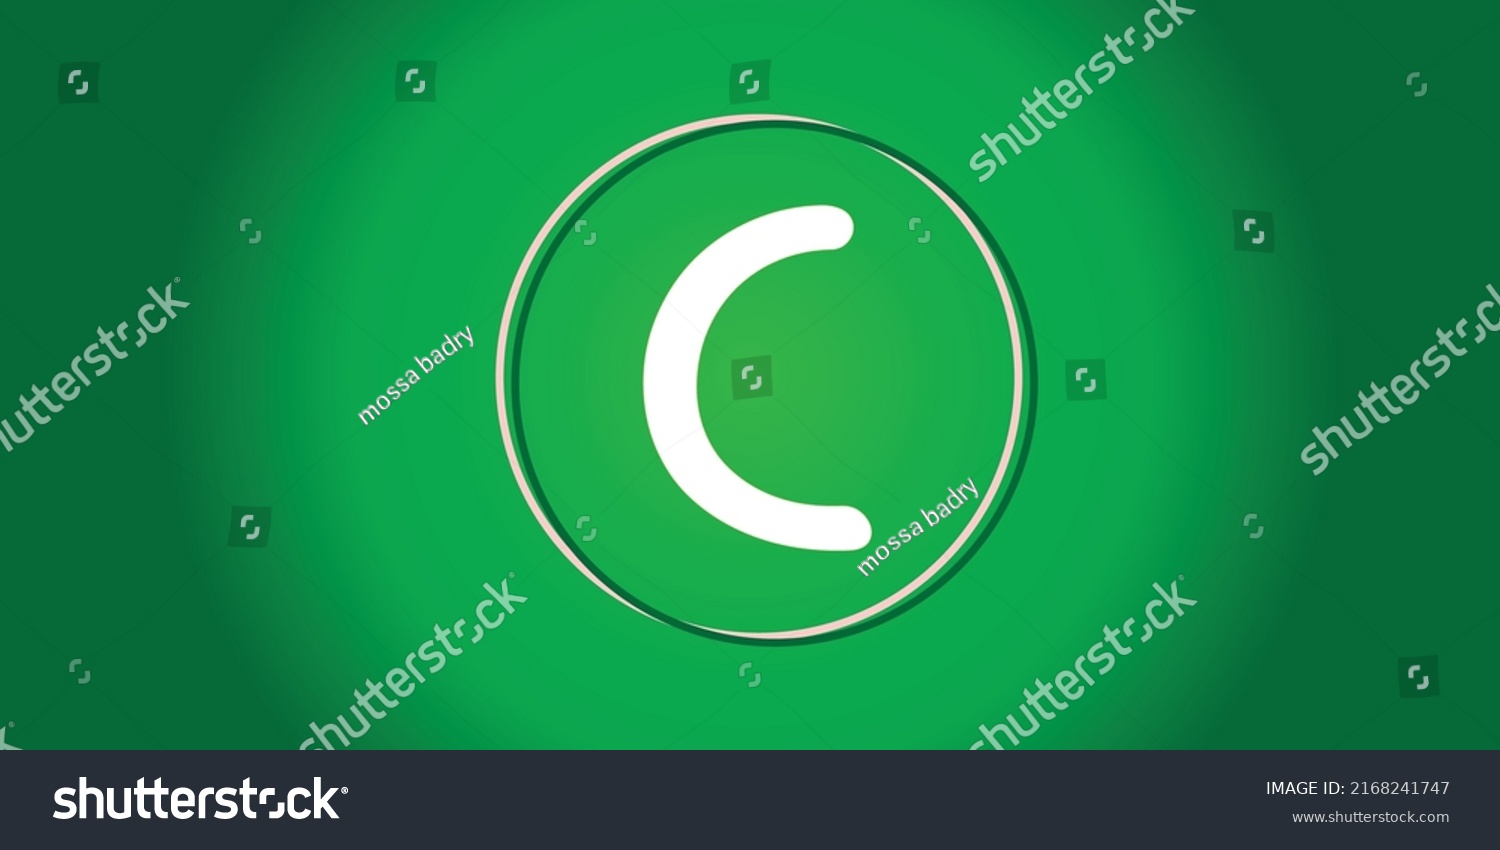 C logo design easy to use #2168241747